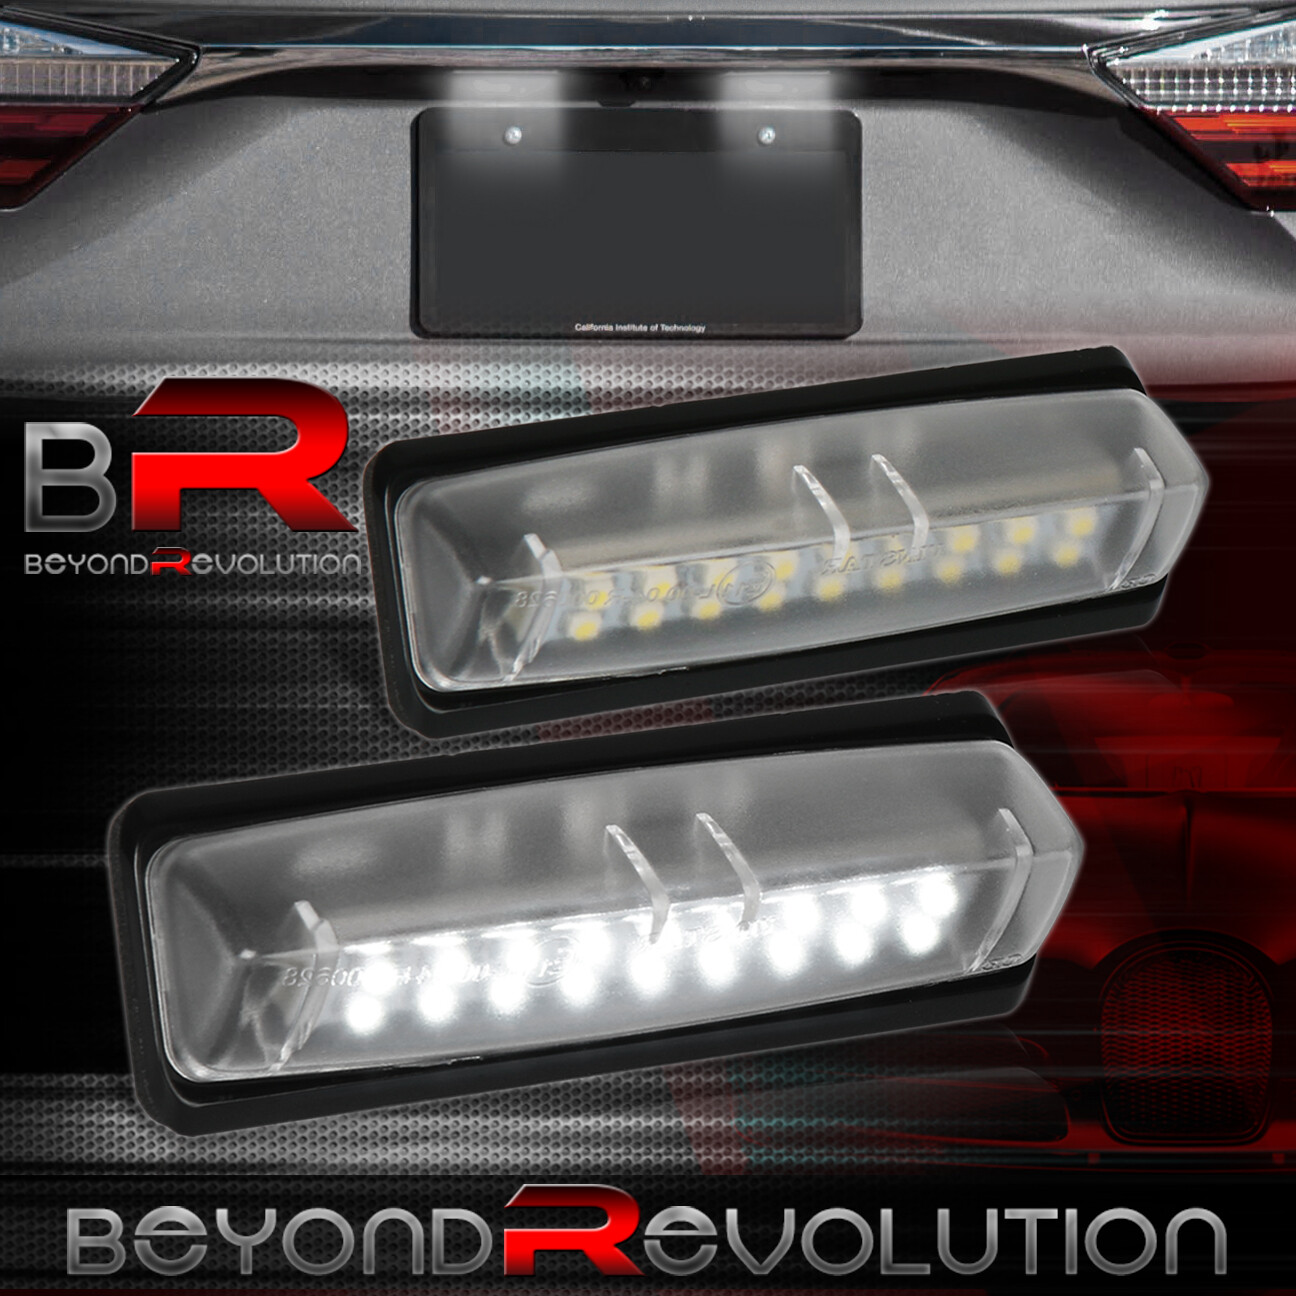 For Lexus RX350 GS430 CT200h White 18-LED License Plate Rear Bumper Light Set | eBay 2007 Lexus Rx 350 License Plate Light